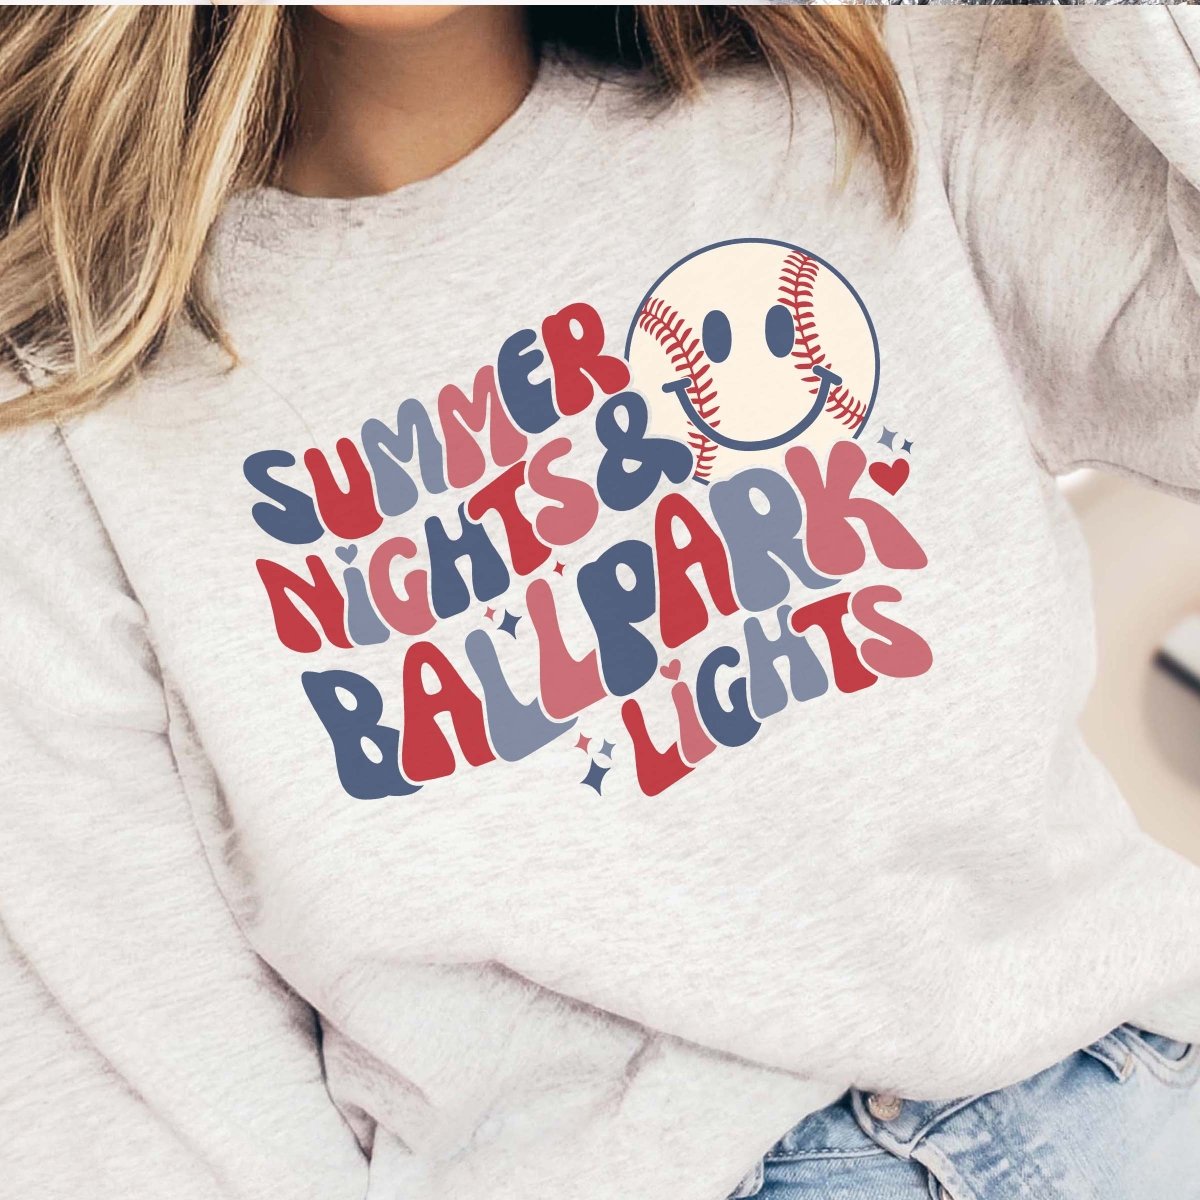 Summer Nights, Ballpark Lights Wholesale Crew - Limeberry Designs